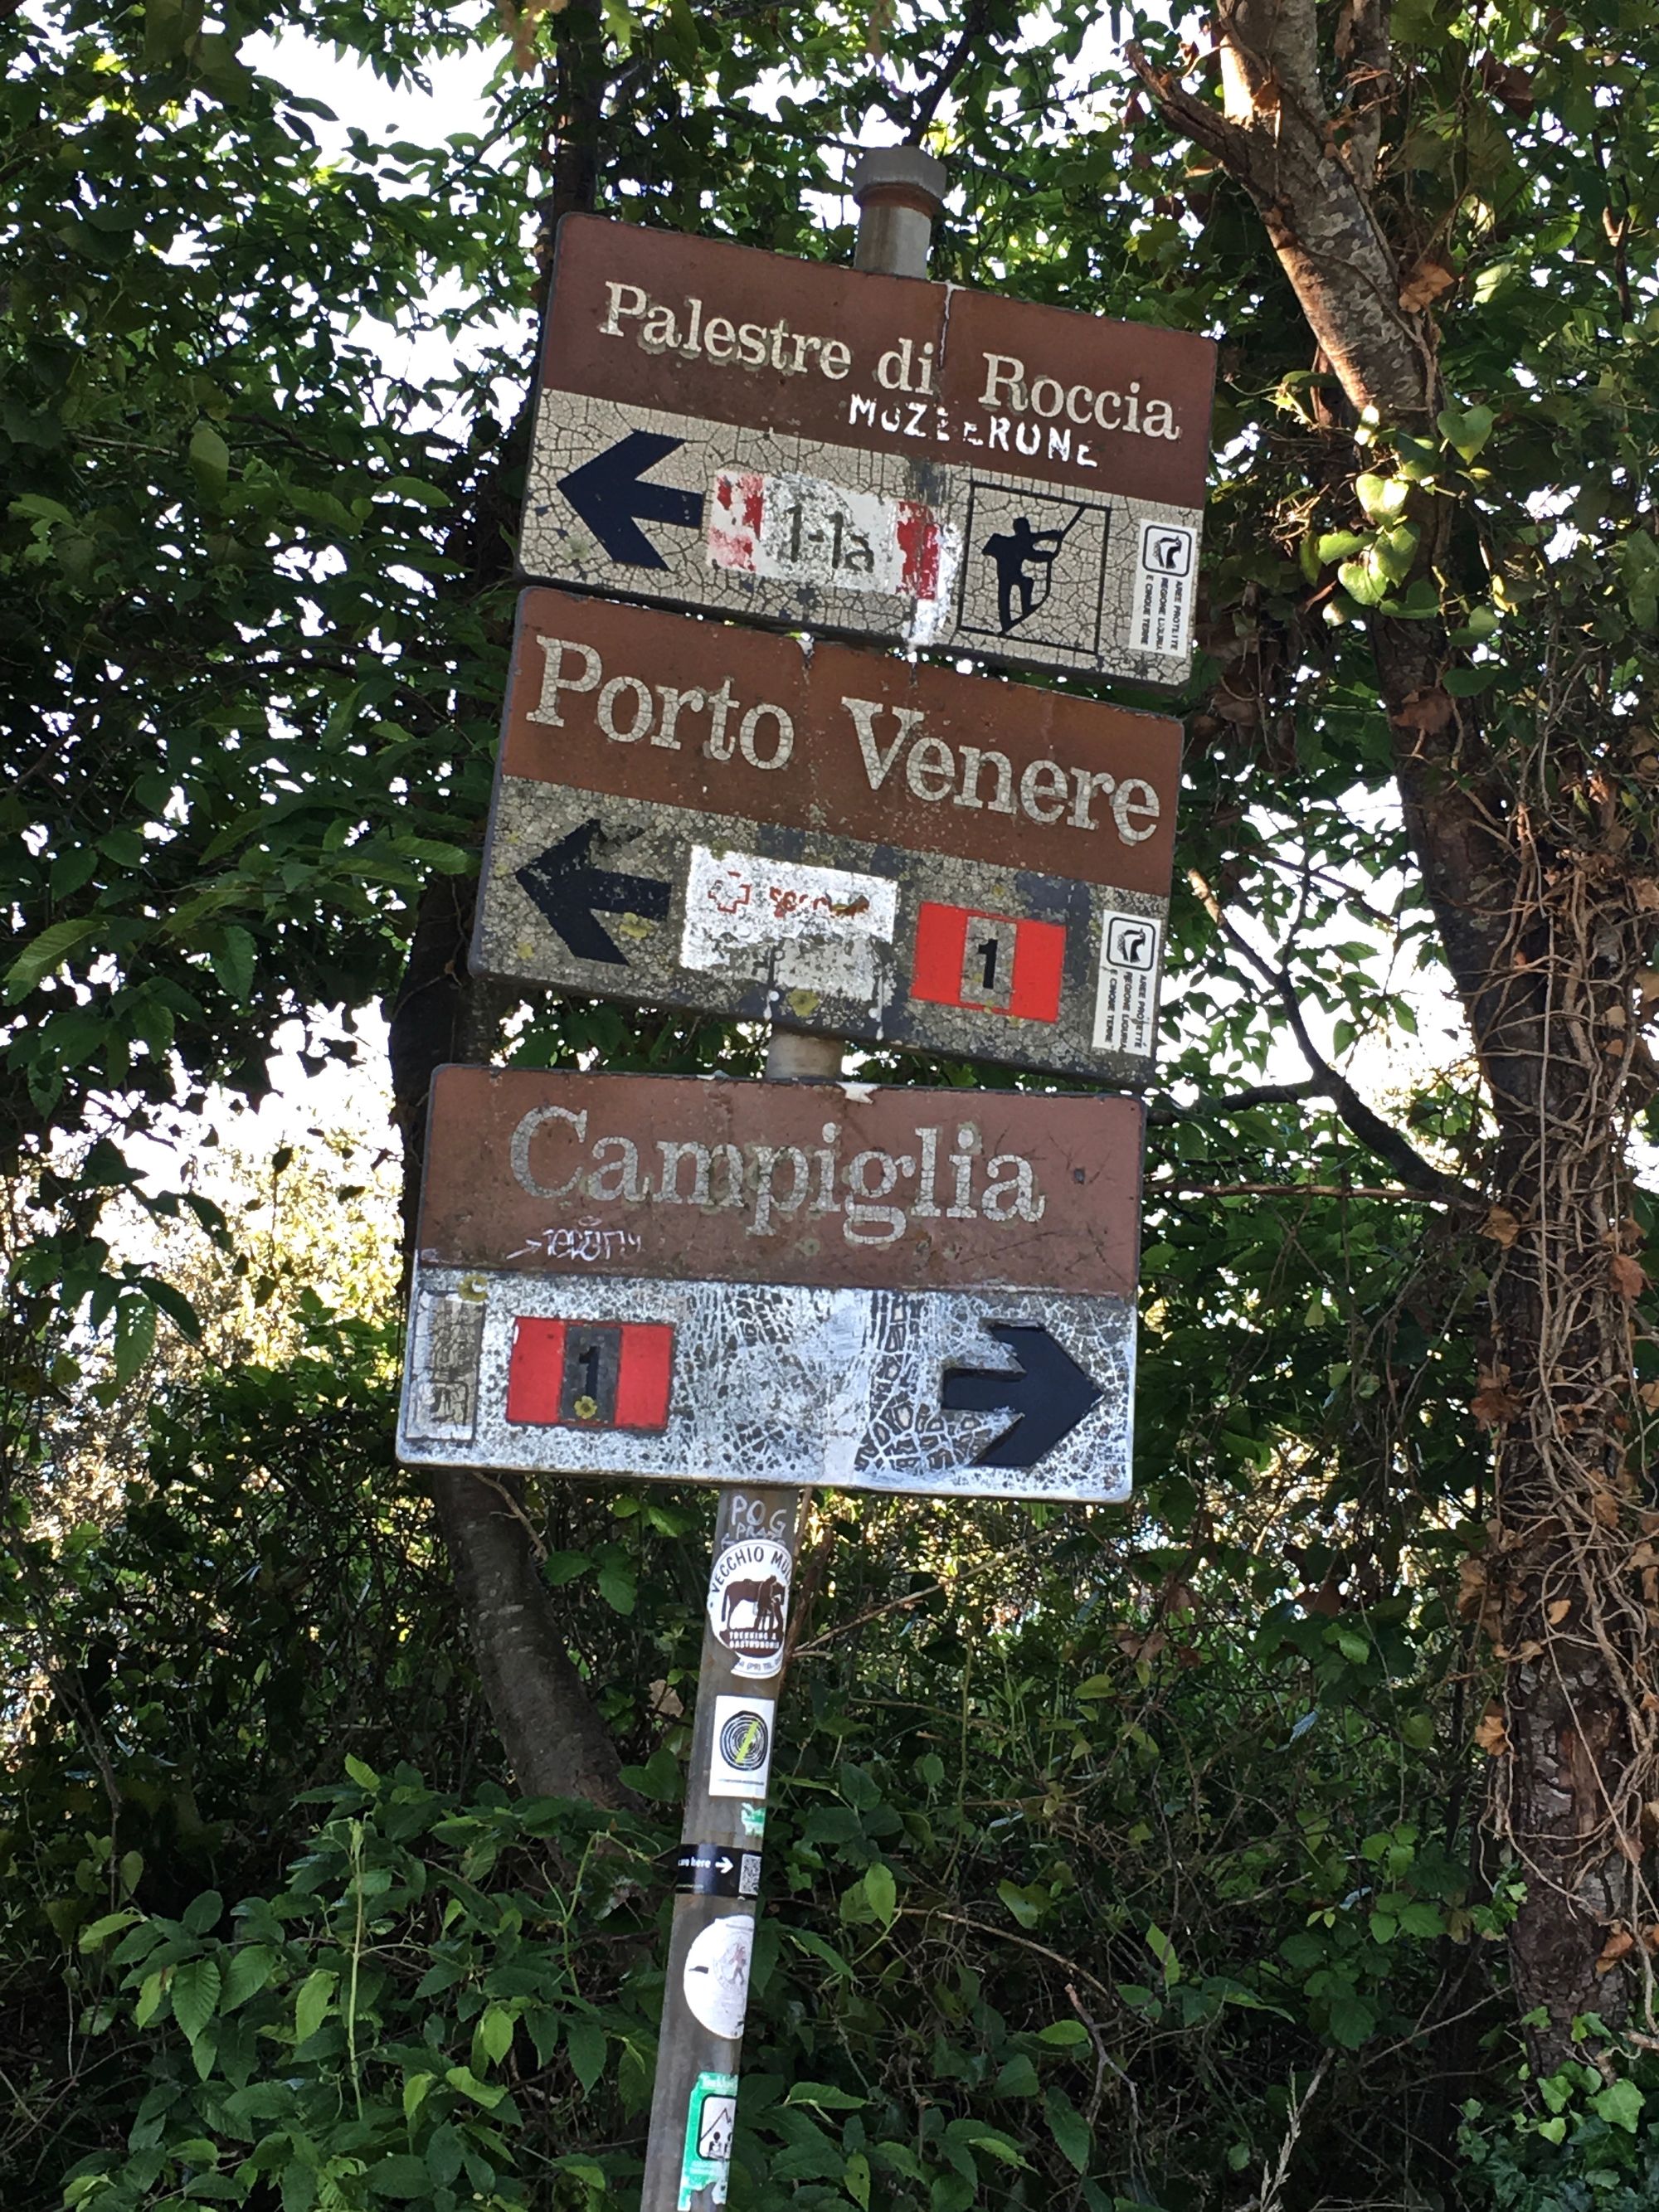 The Cinque Terre: Part III